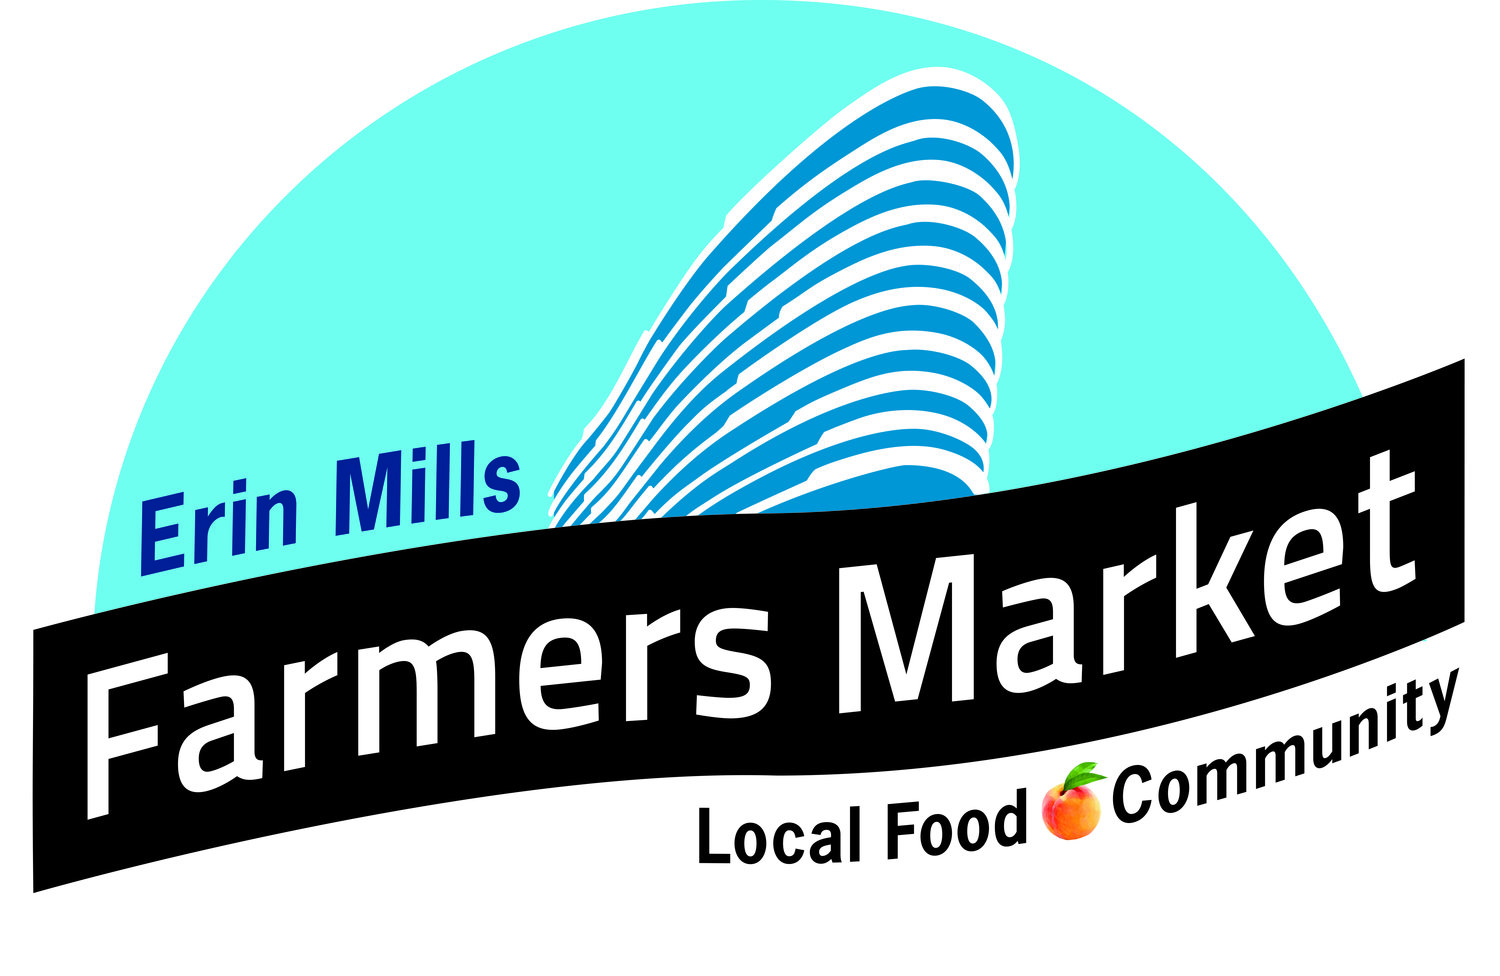 Erin Mills Farmers Market logo